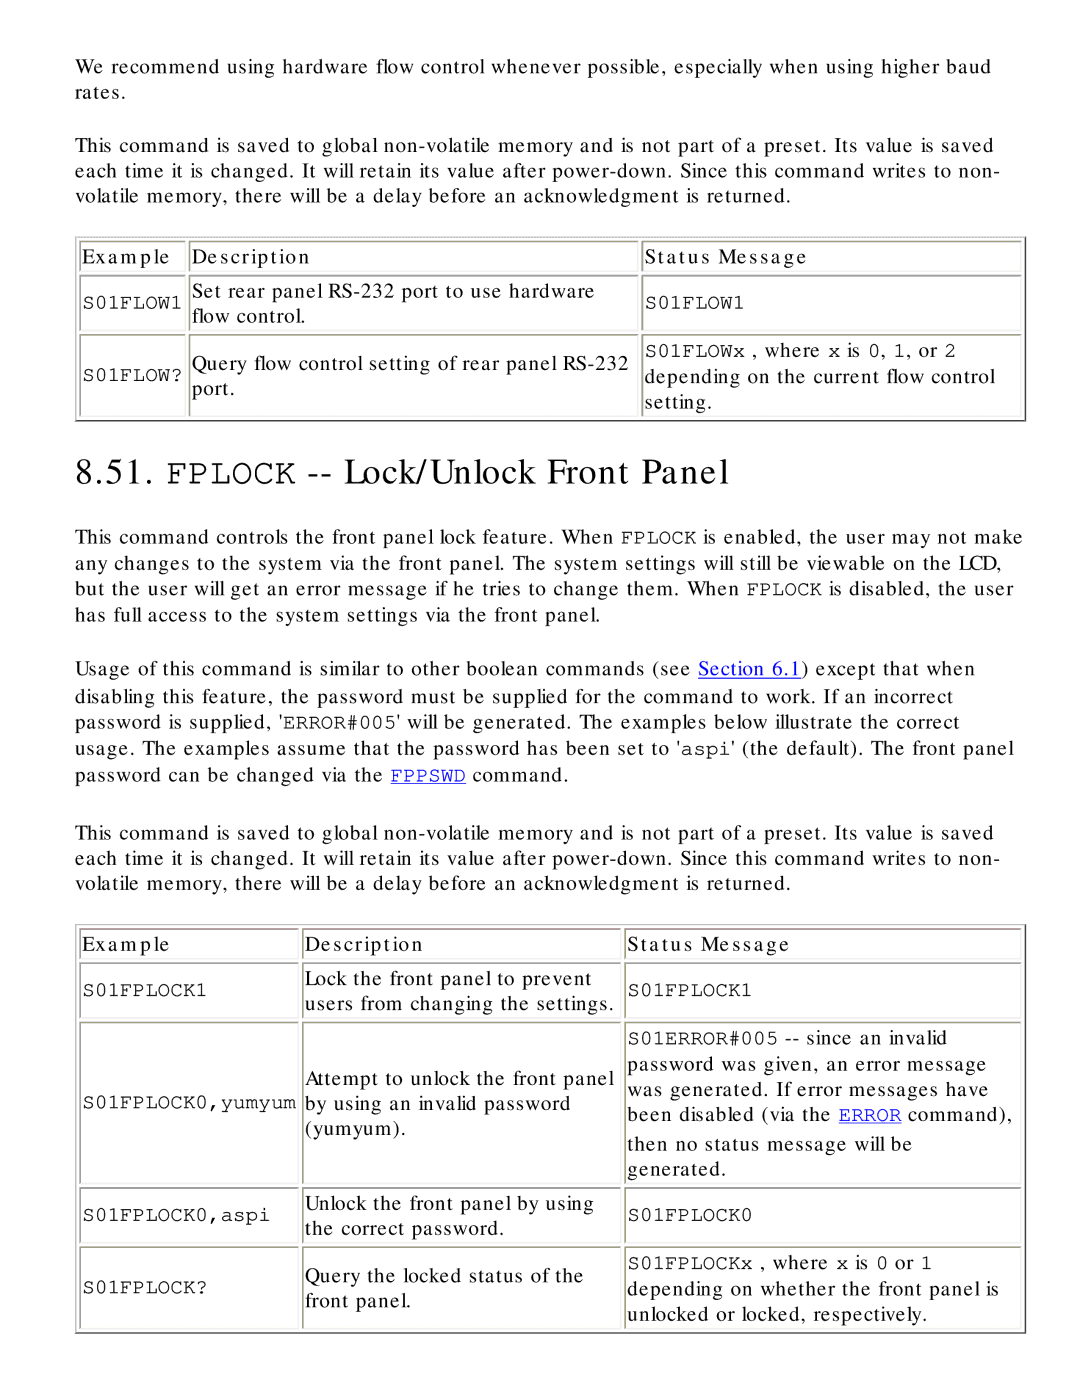 Polycom RS-232 manual Fplock -- Lock/Unlock Front Panel, Status Message 